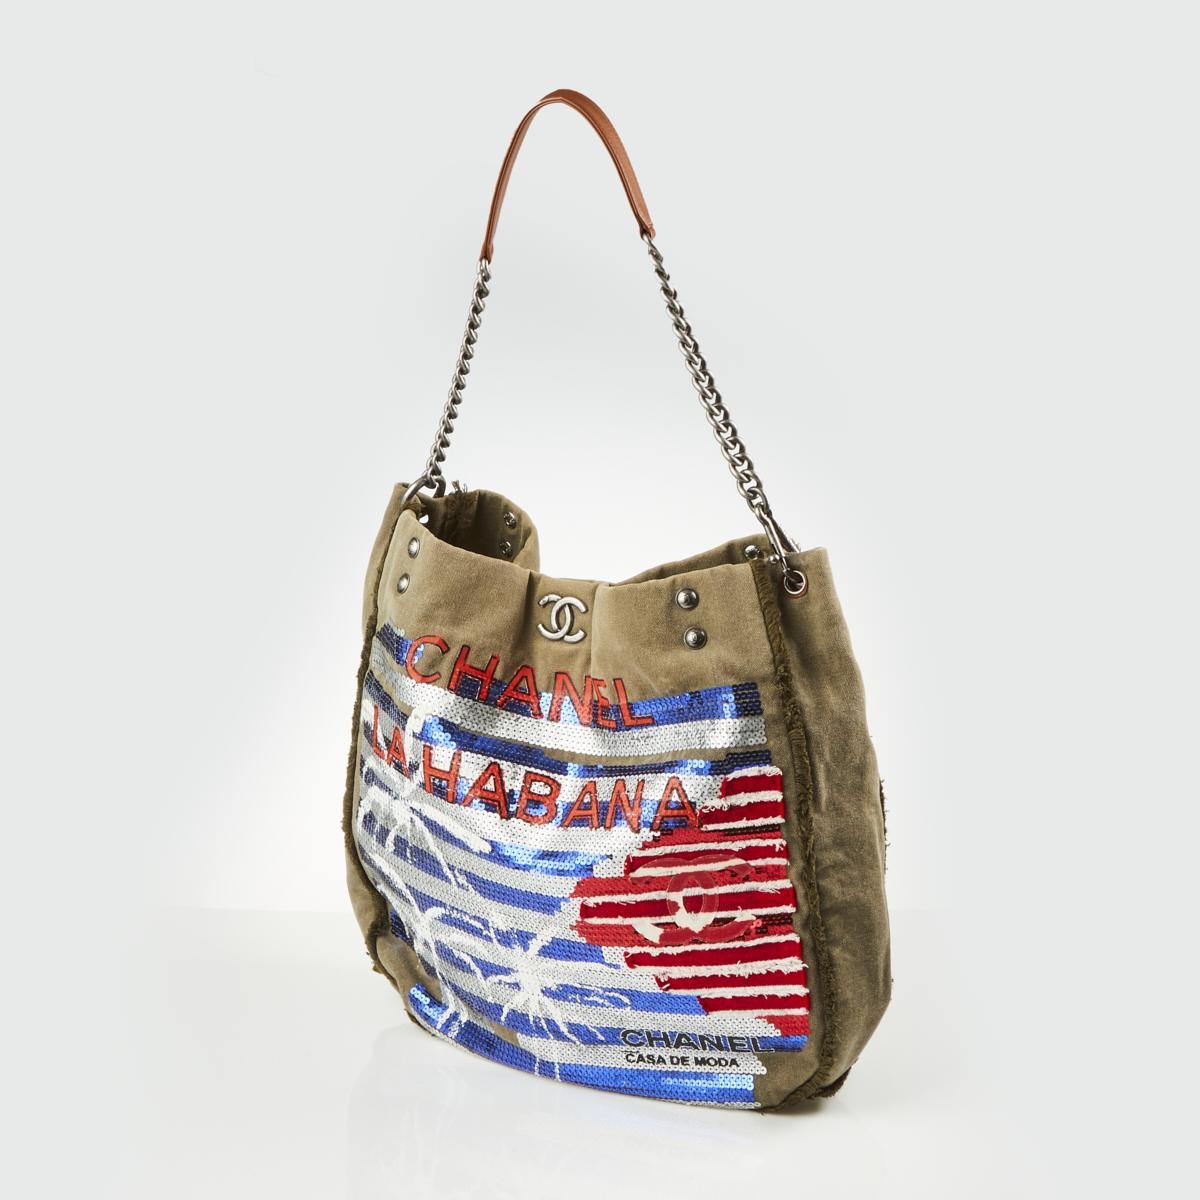 Sold at Auction: Vintage Chanel Canvas Handbag